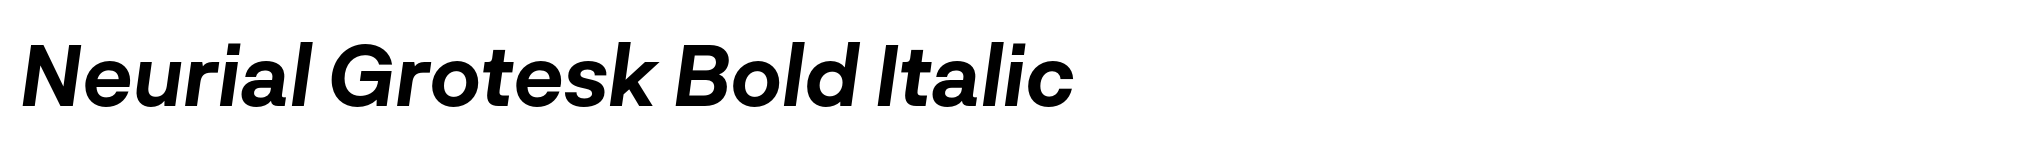 Neurial Grotesk Bold Italic image